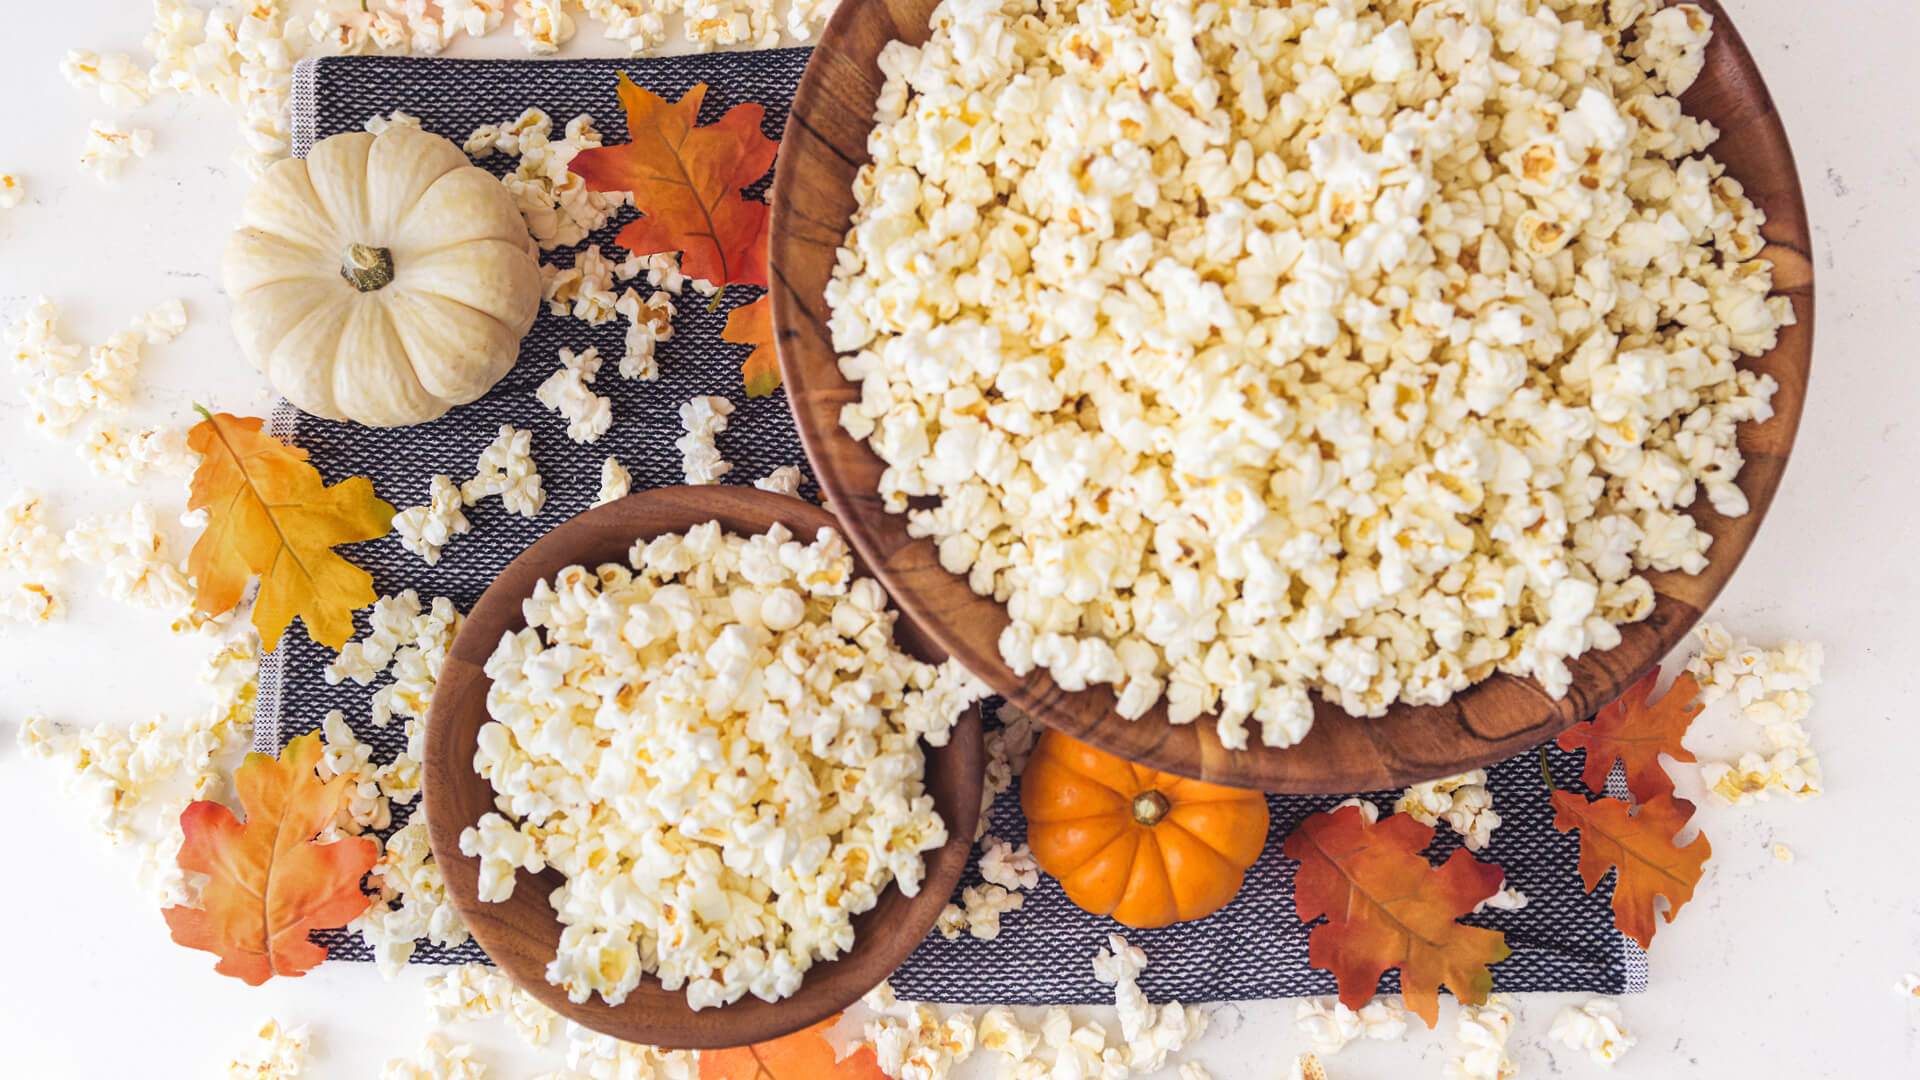 Bowls of Orville Redenbacher’s popcorn.